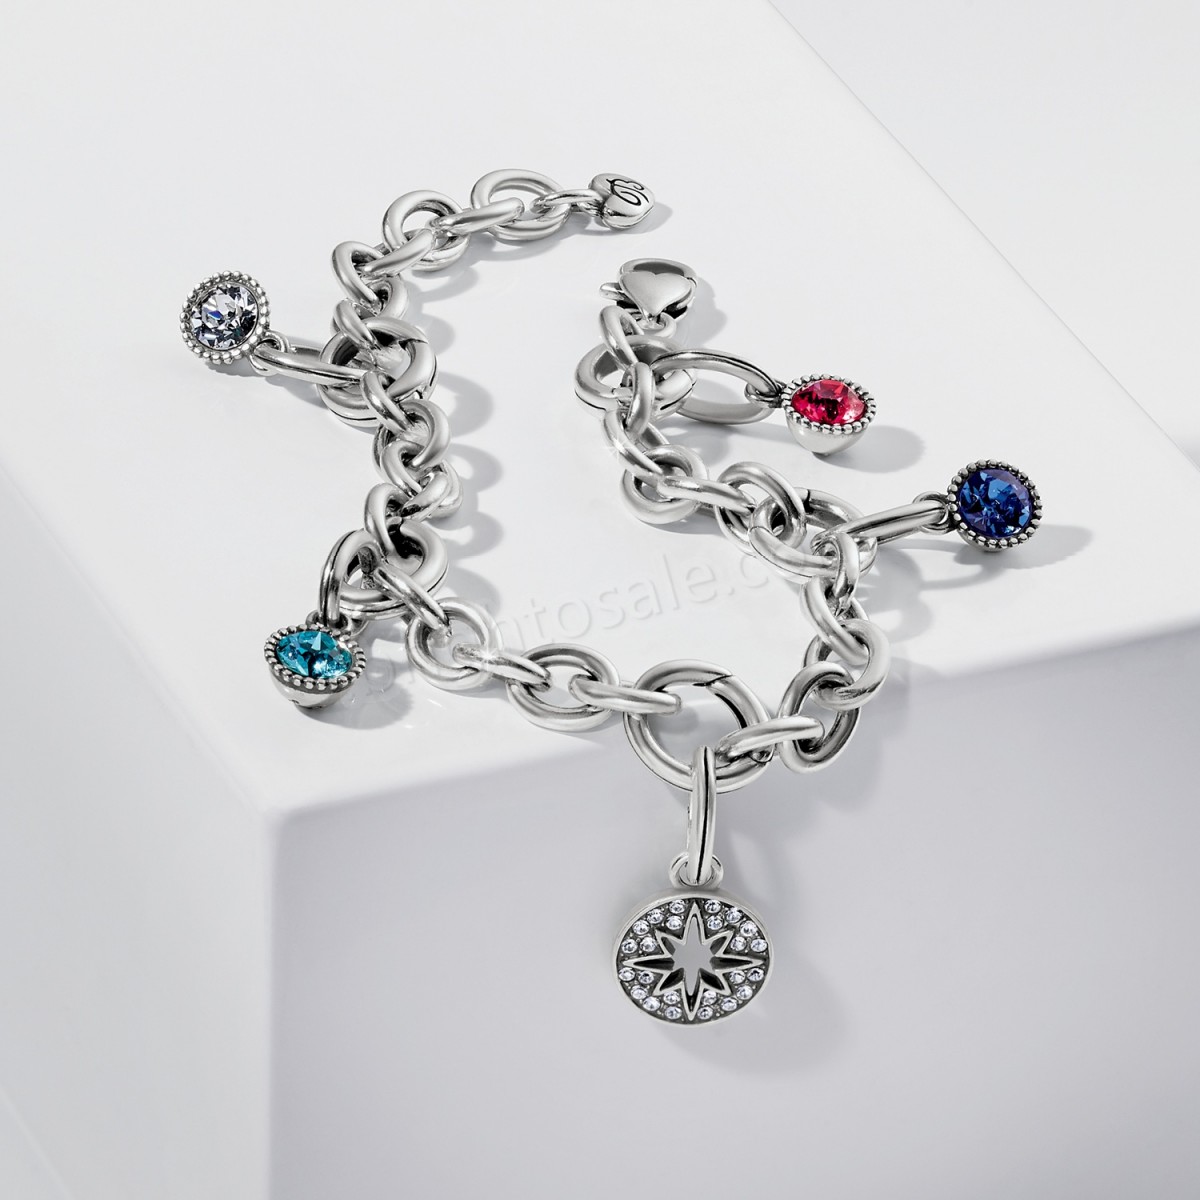 Brighton Collectibles & Online Discount Always Look Up Amulet Bracelet Set - -0